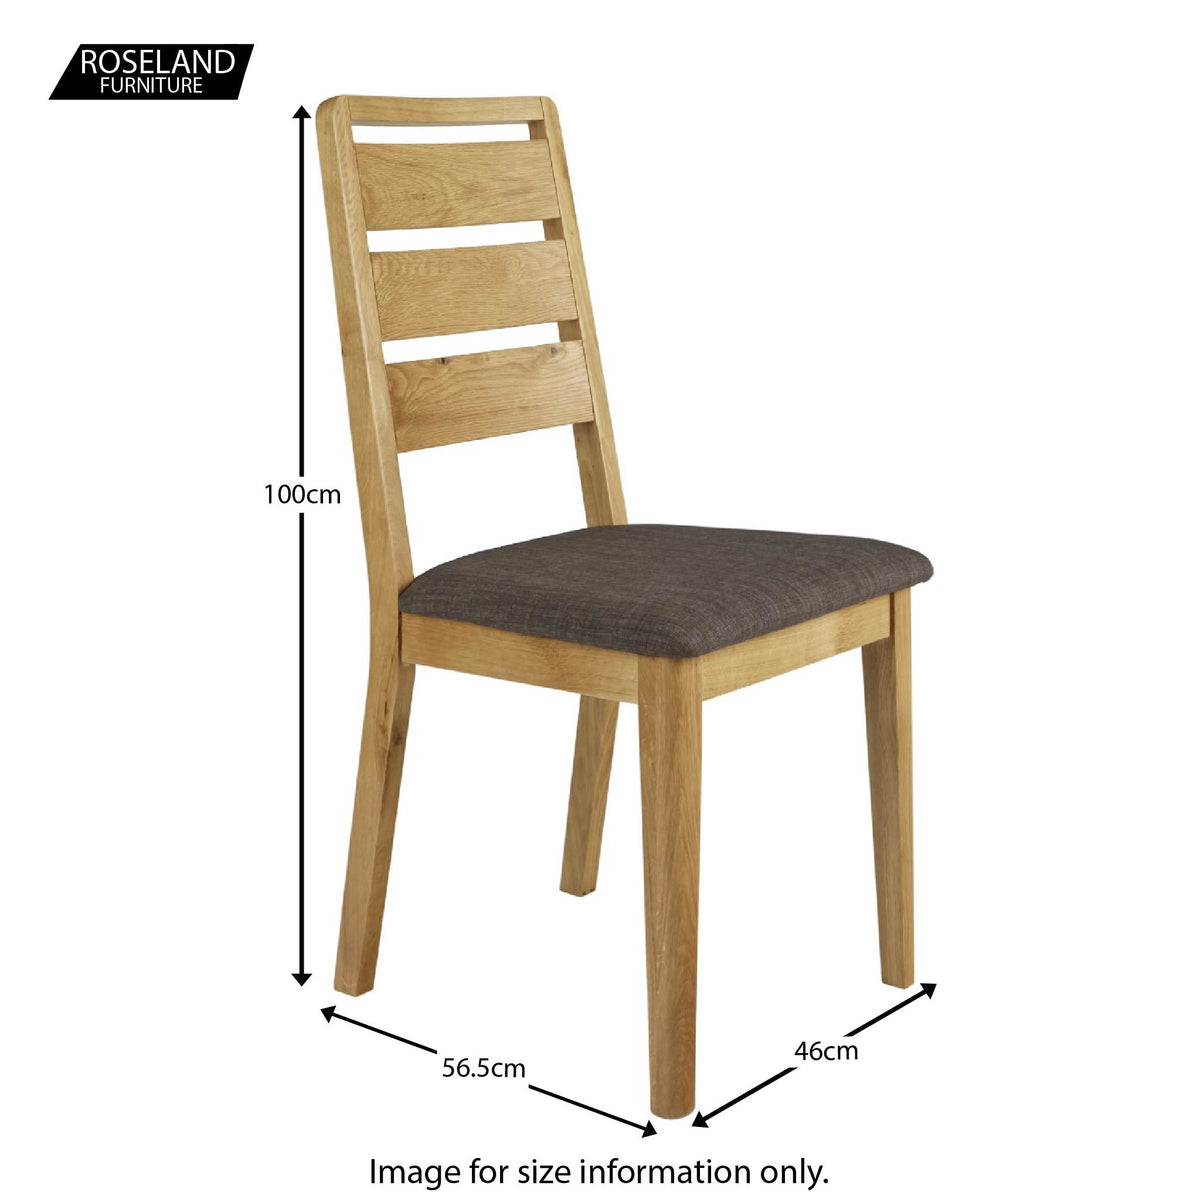 Alba Oak Ladder Back Dining Chair - Size guide